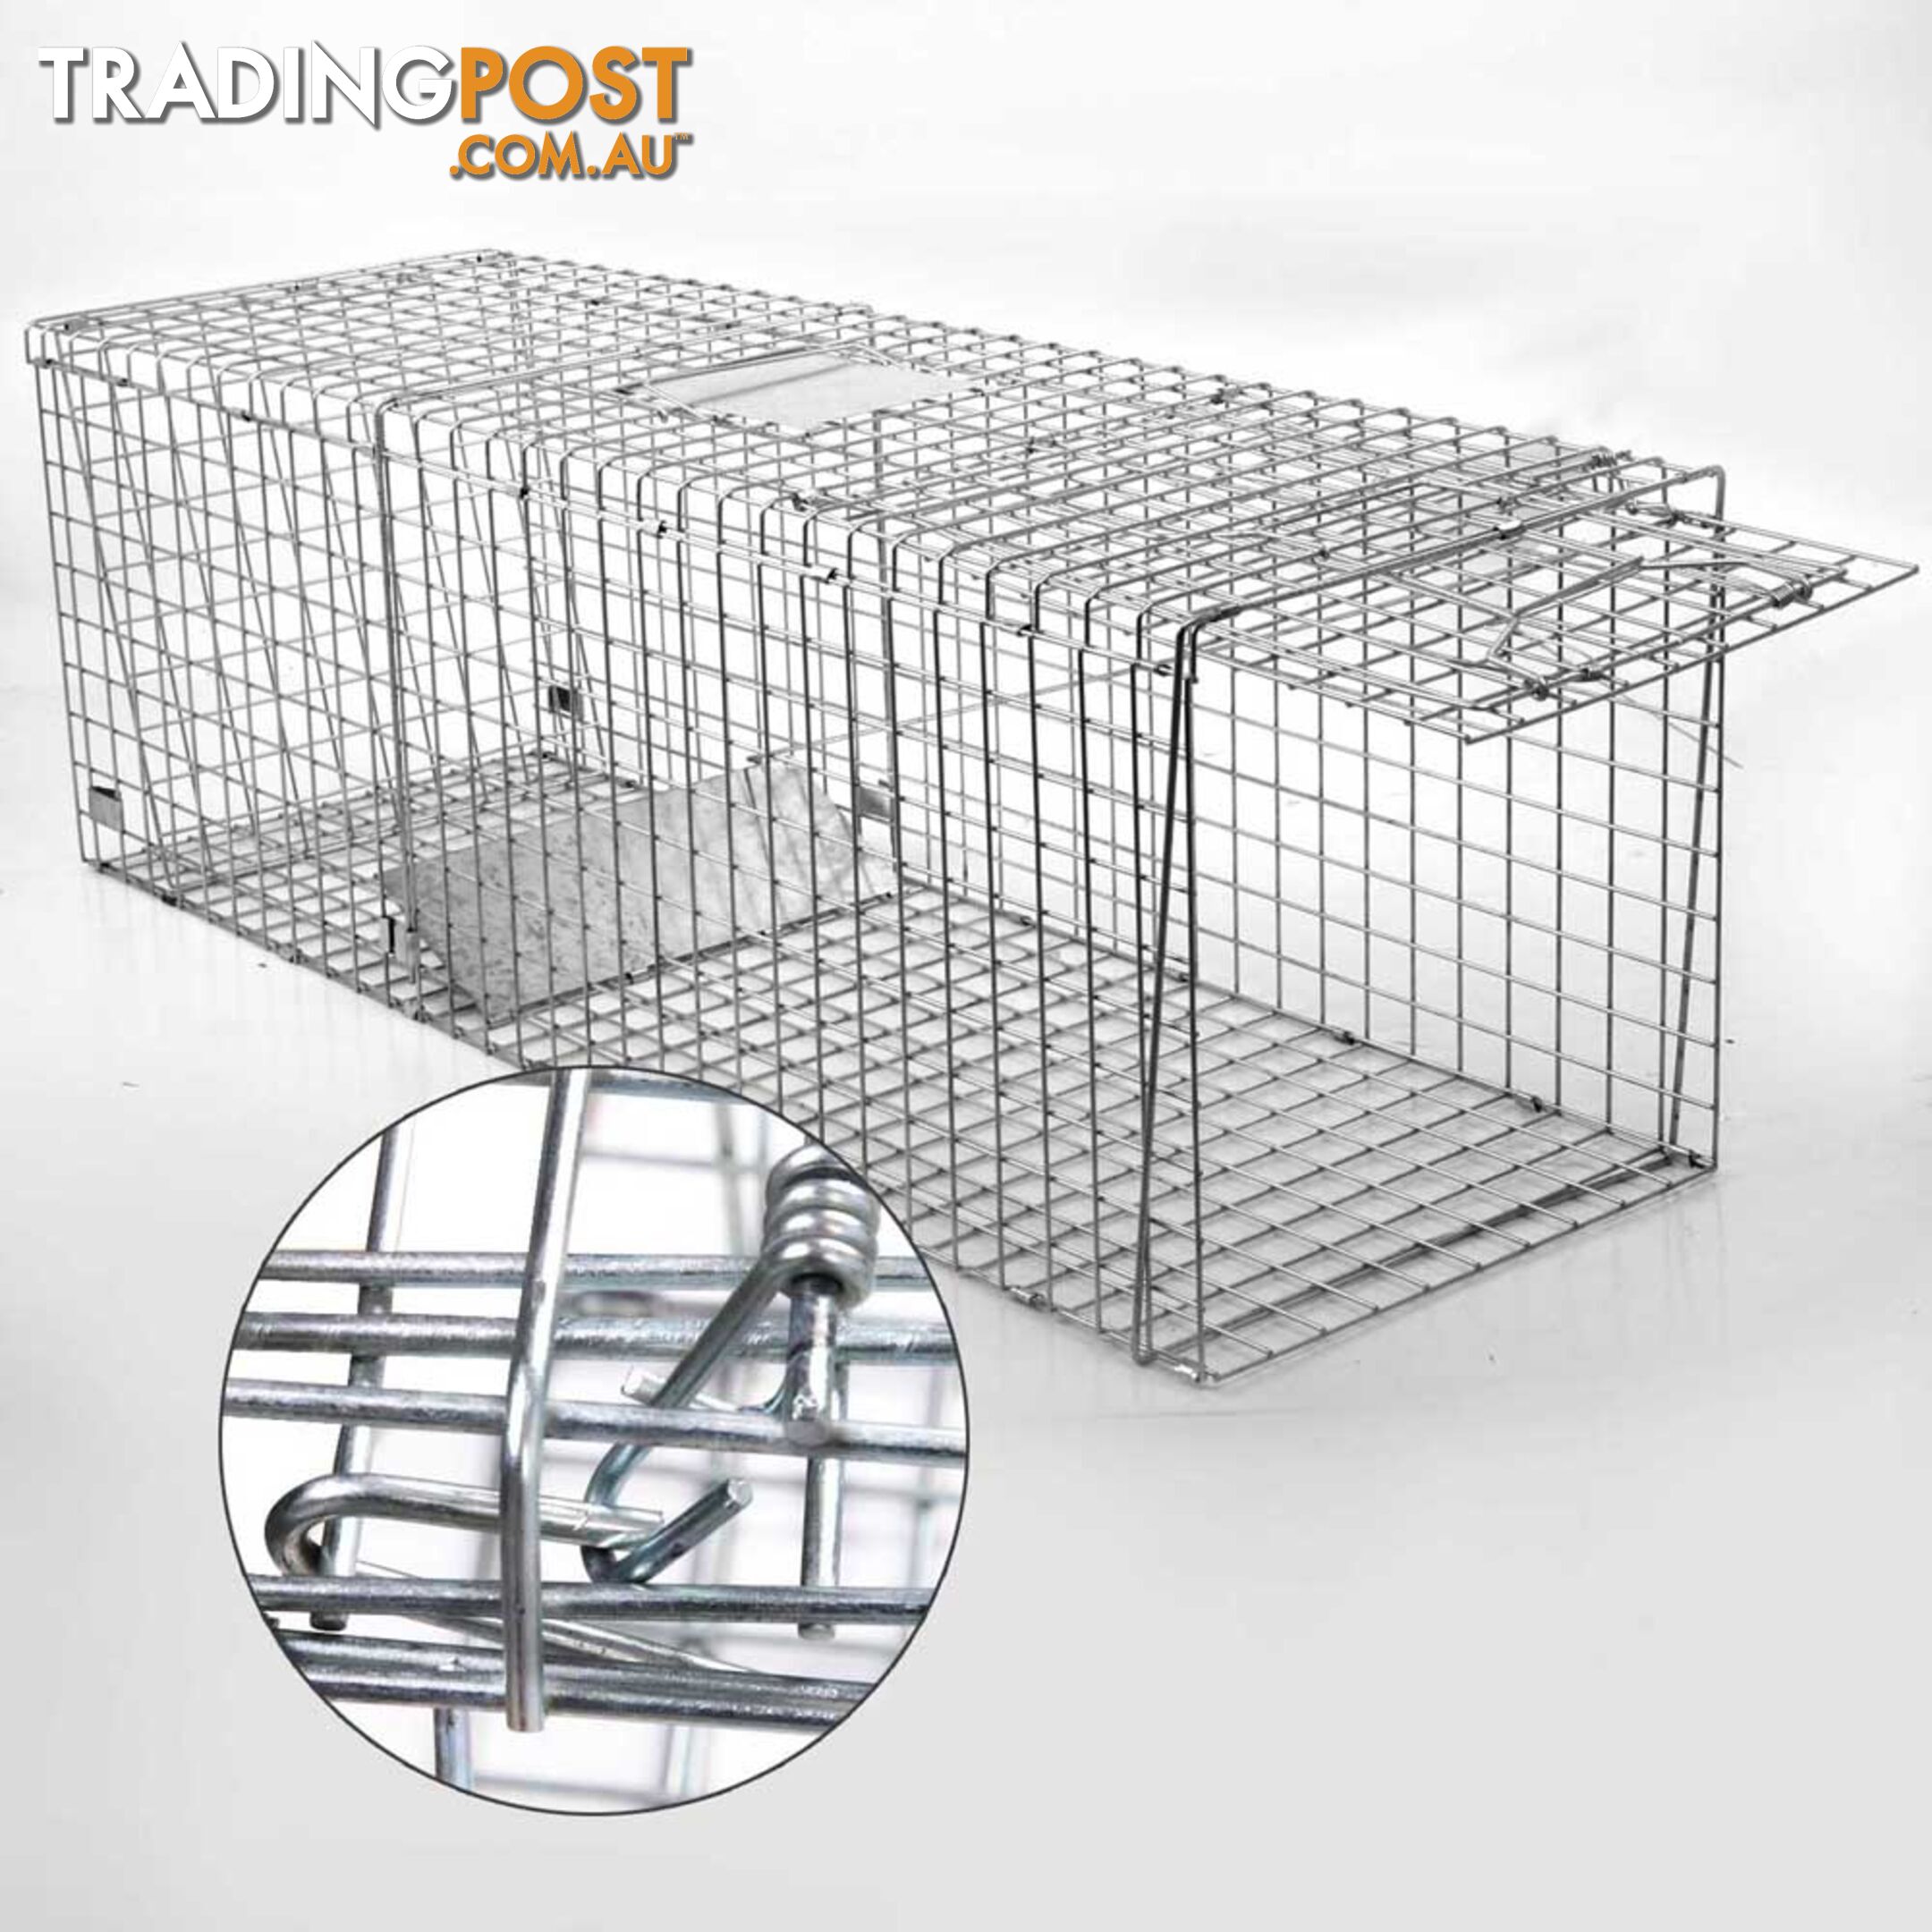 Humane Animal Trap Cage - Extra Large